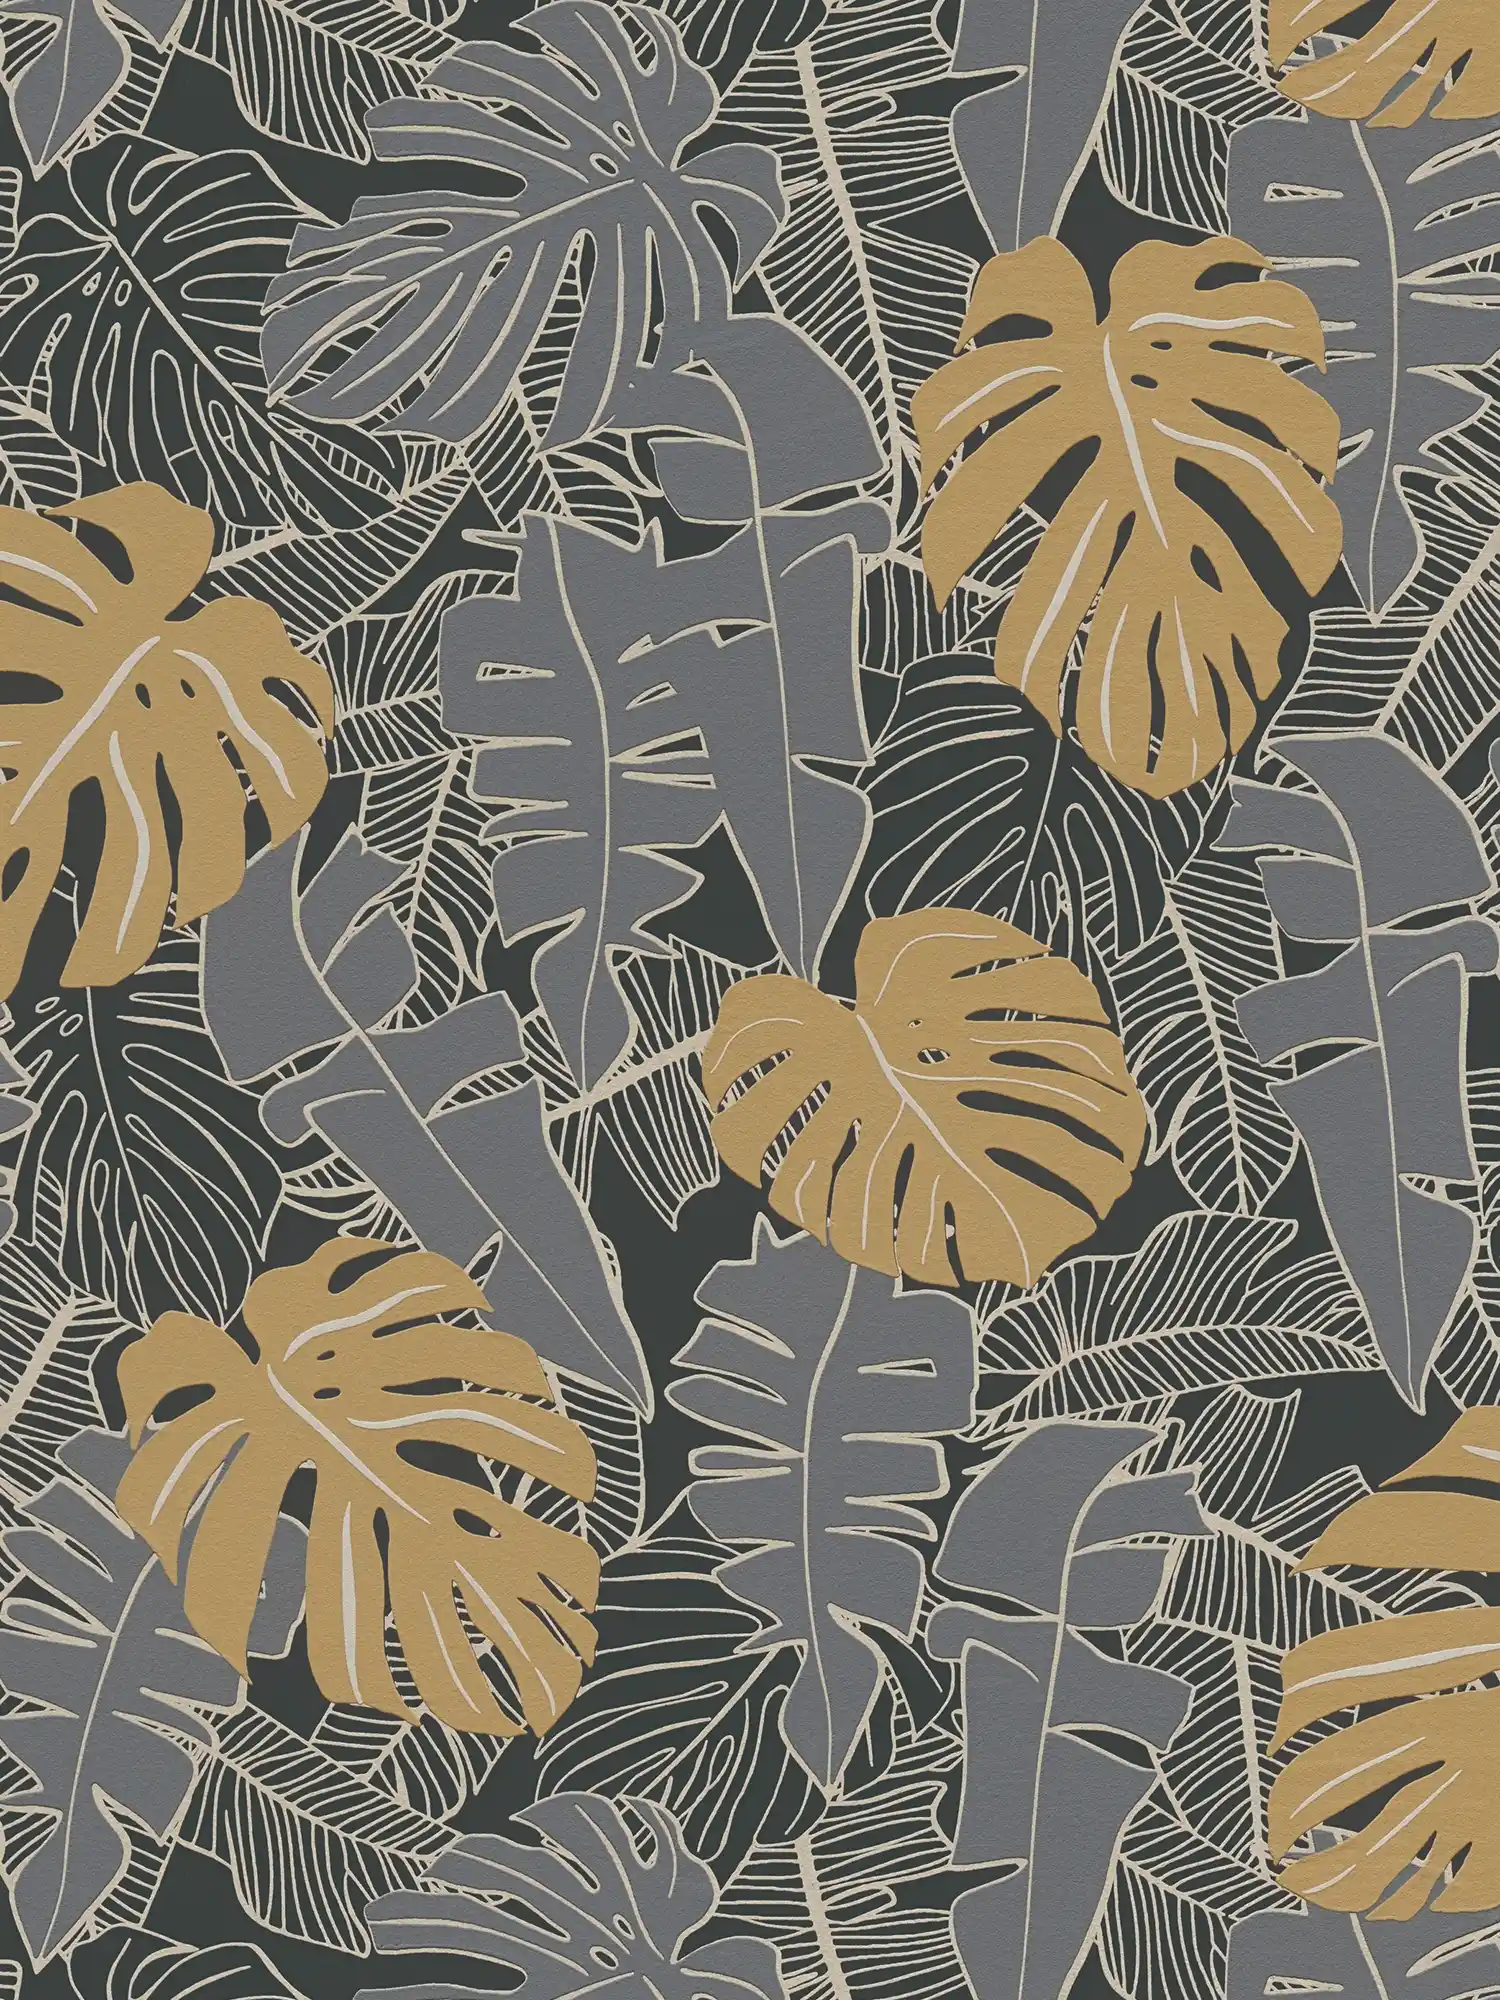 Jungle wallpaper with banana leaves & metallic look - black, gold, grey
